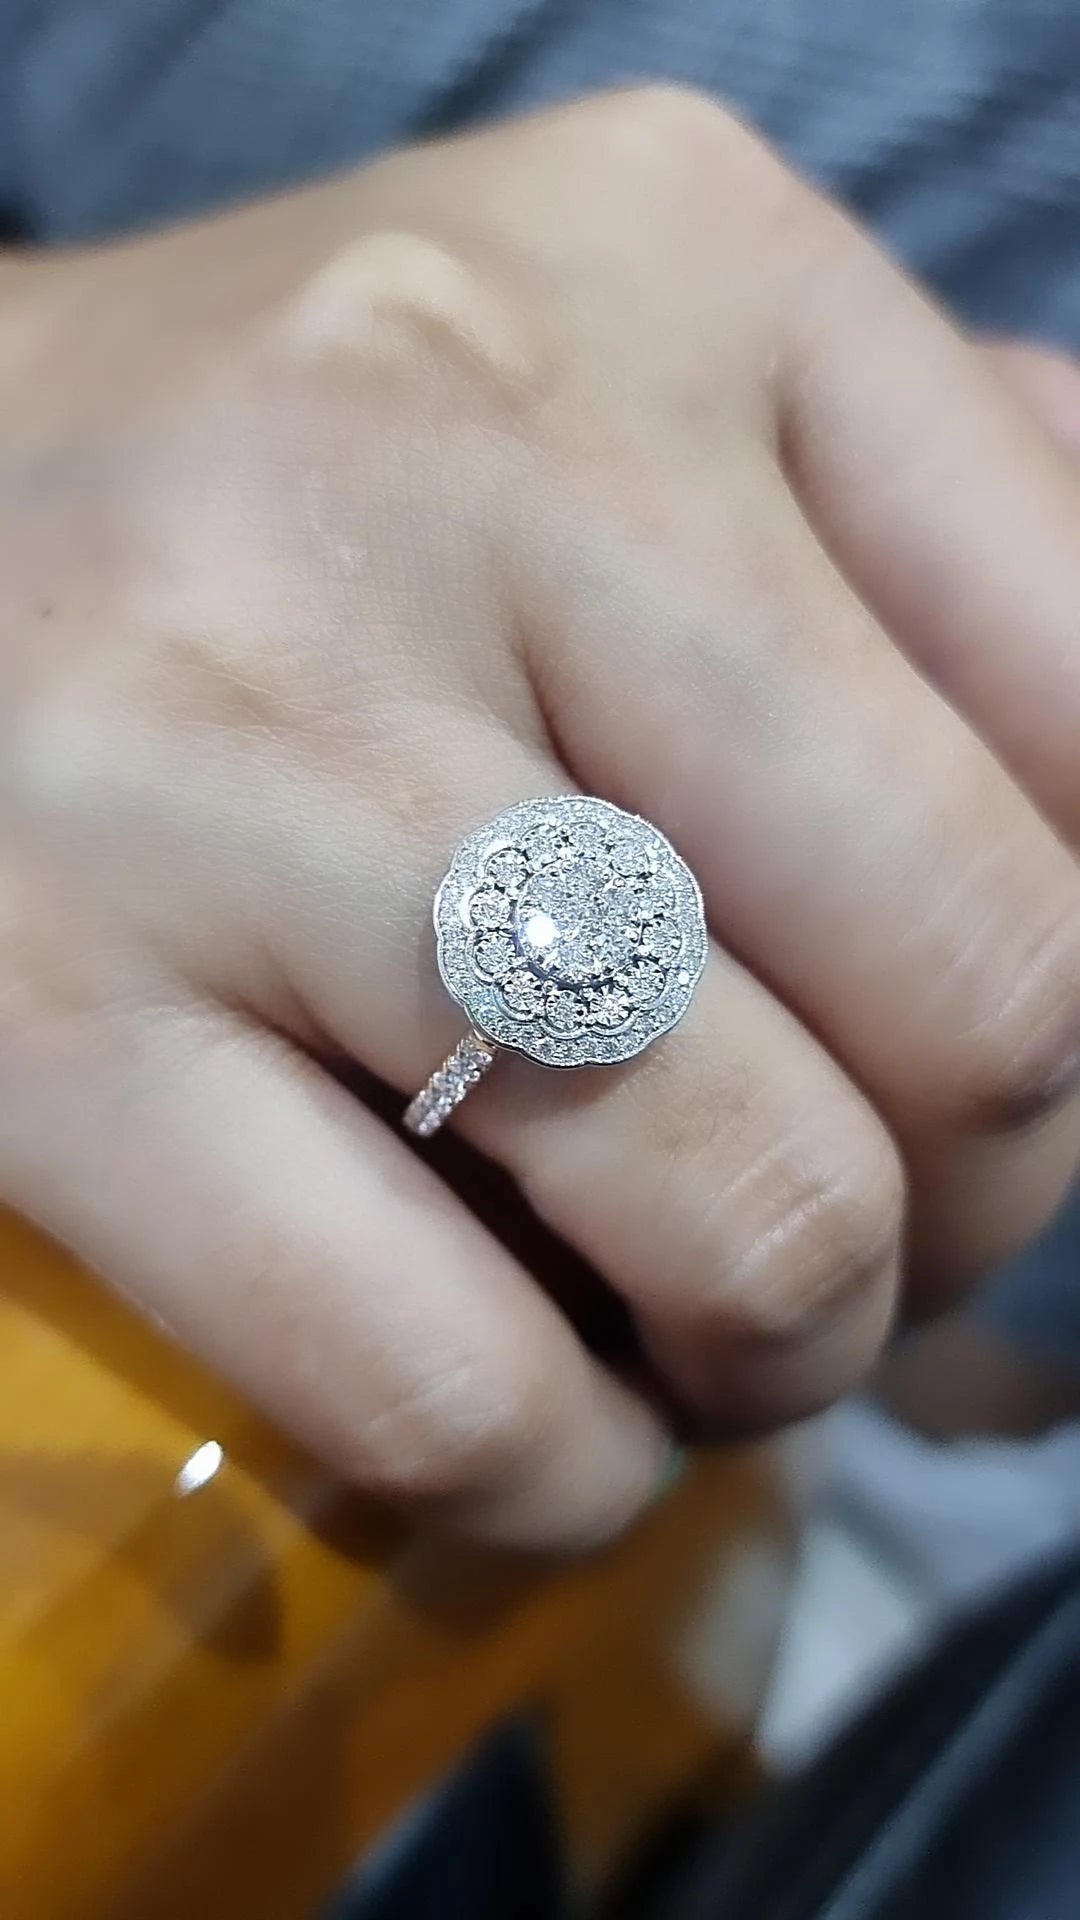 Mandala Inspired Diamond Ring In 18k Rose Gold.